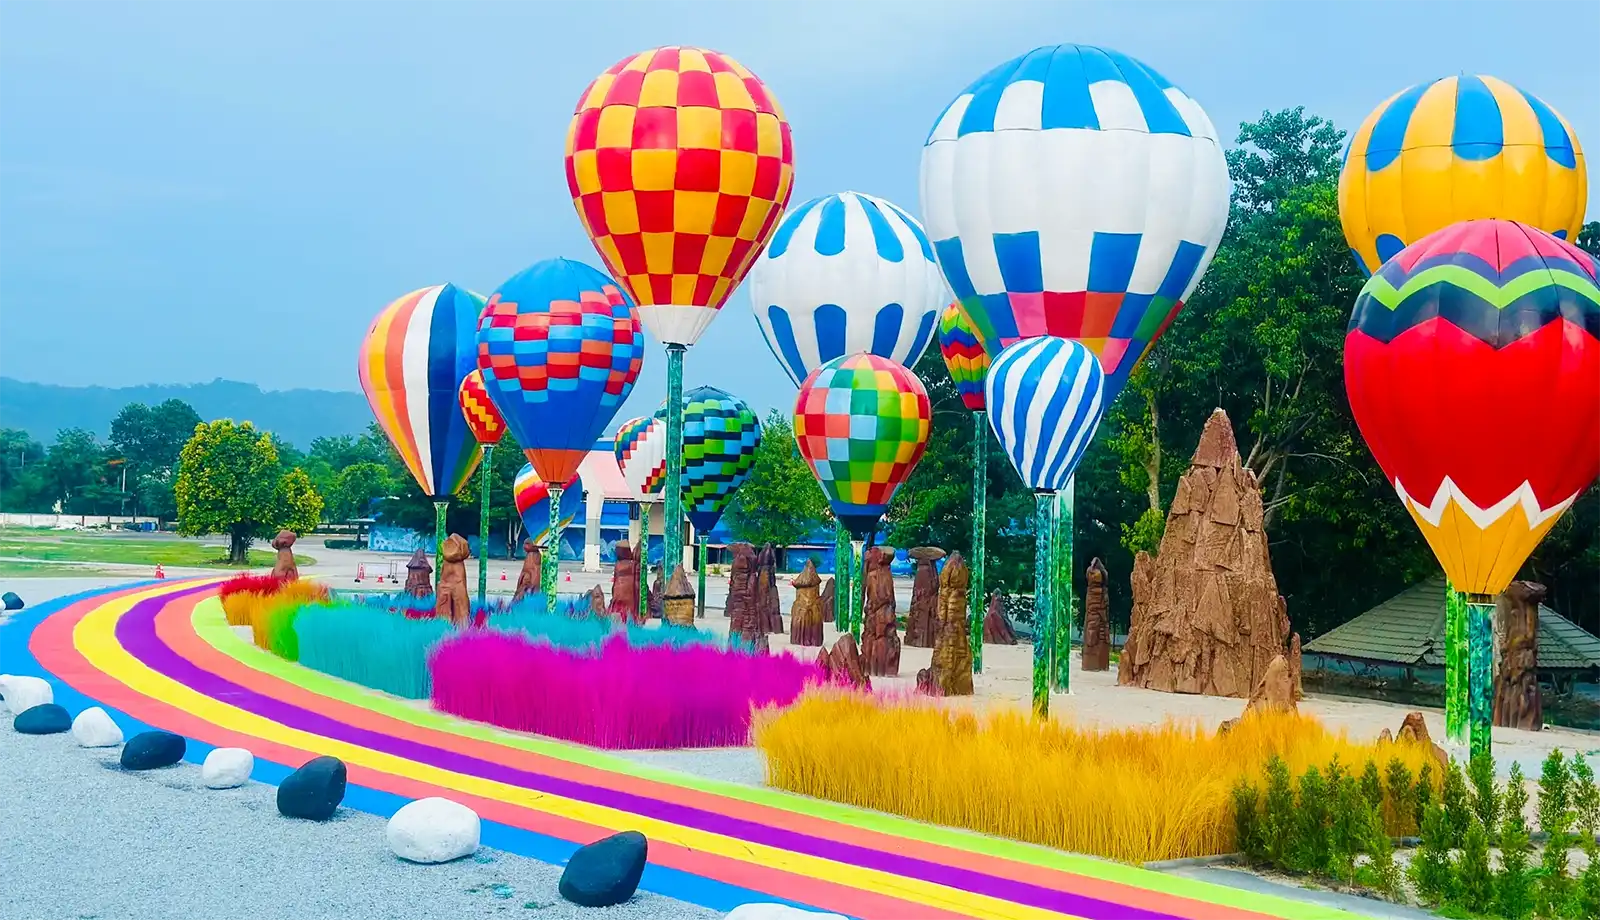 Tour du lịch Bangkok - Pattaya - Thái Lan tham quan Lighting Art Museum & Ballon Garden